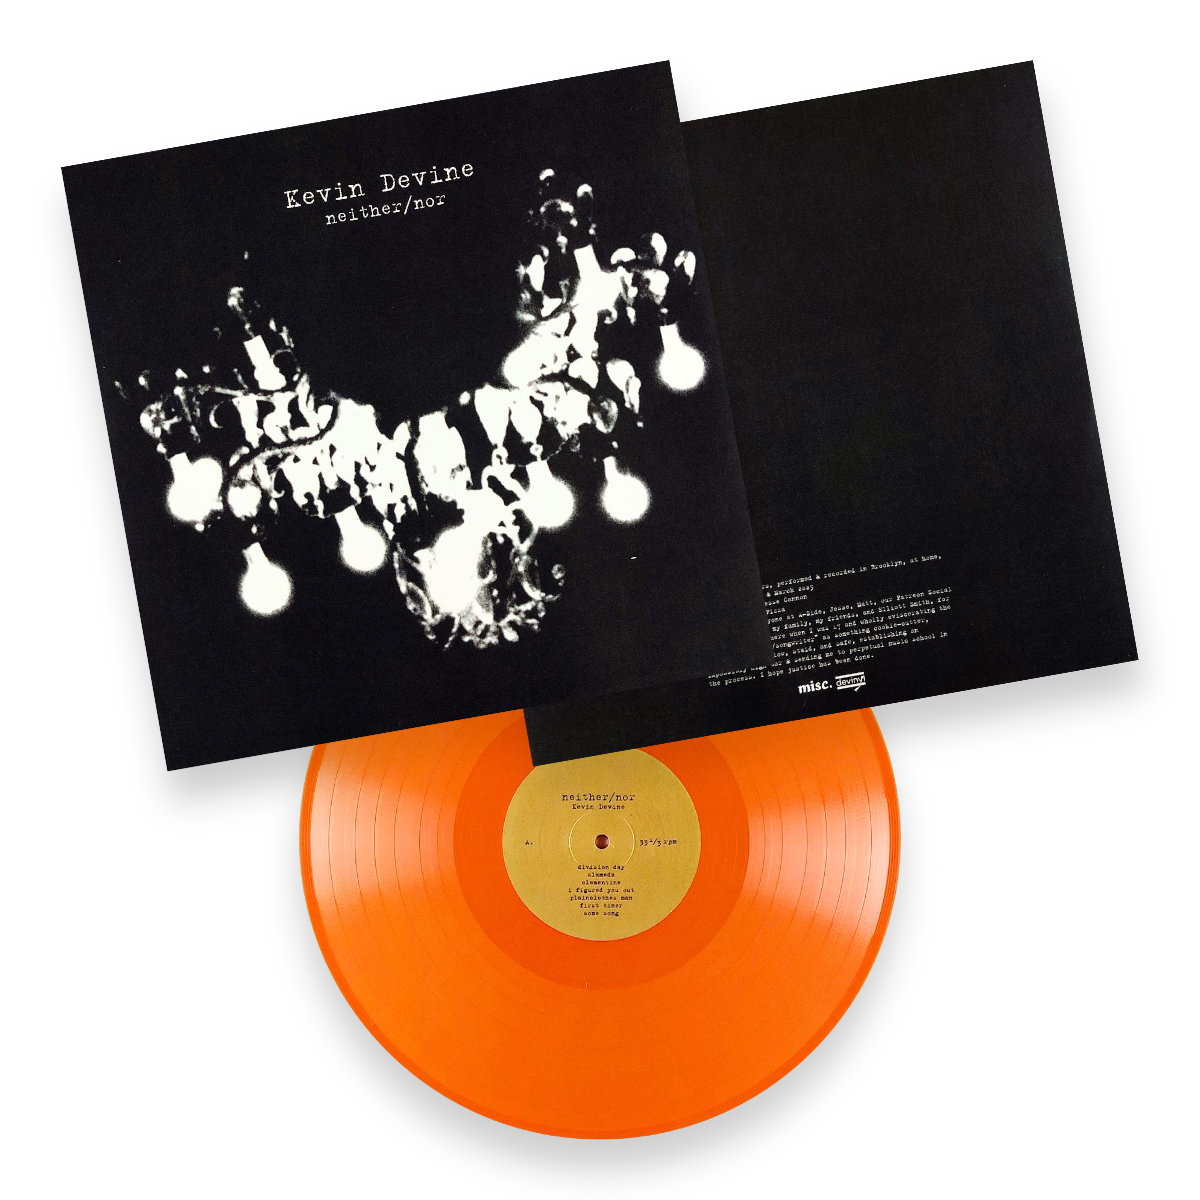 Kevin Devine - Neither/Nor Orange LP